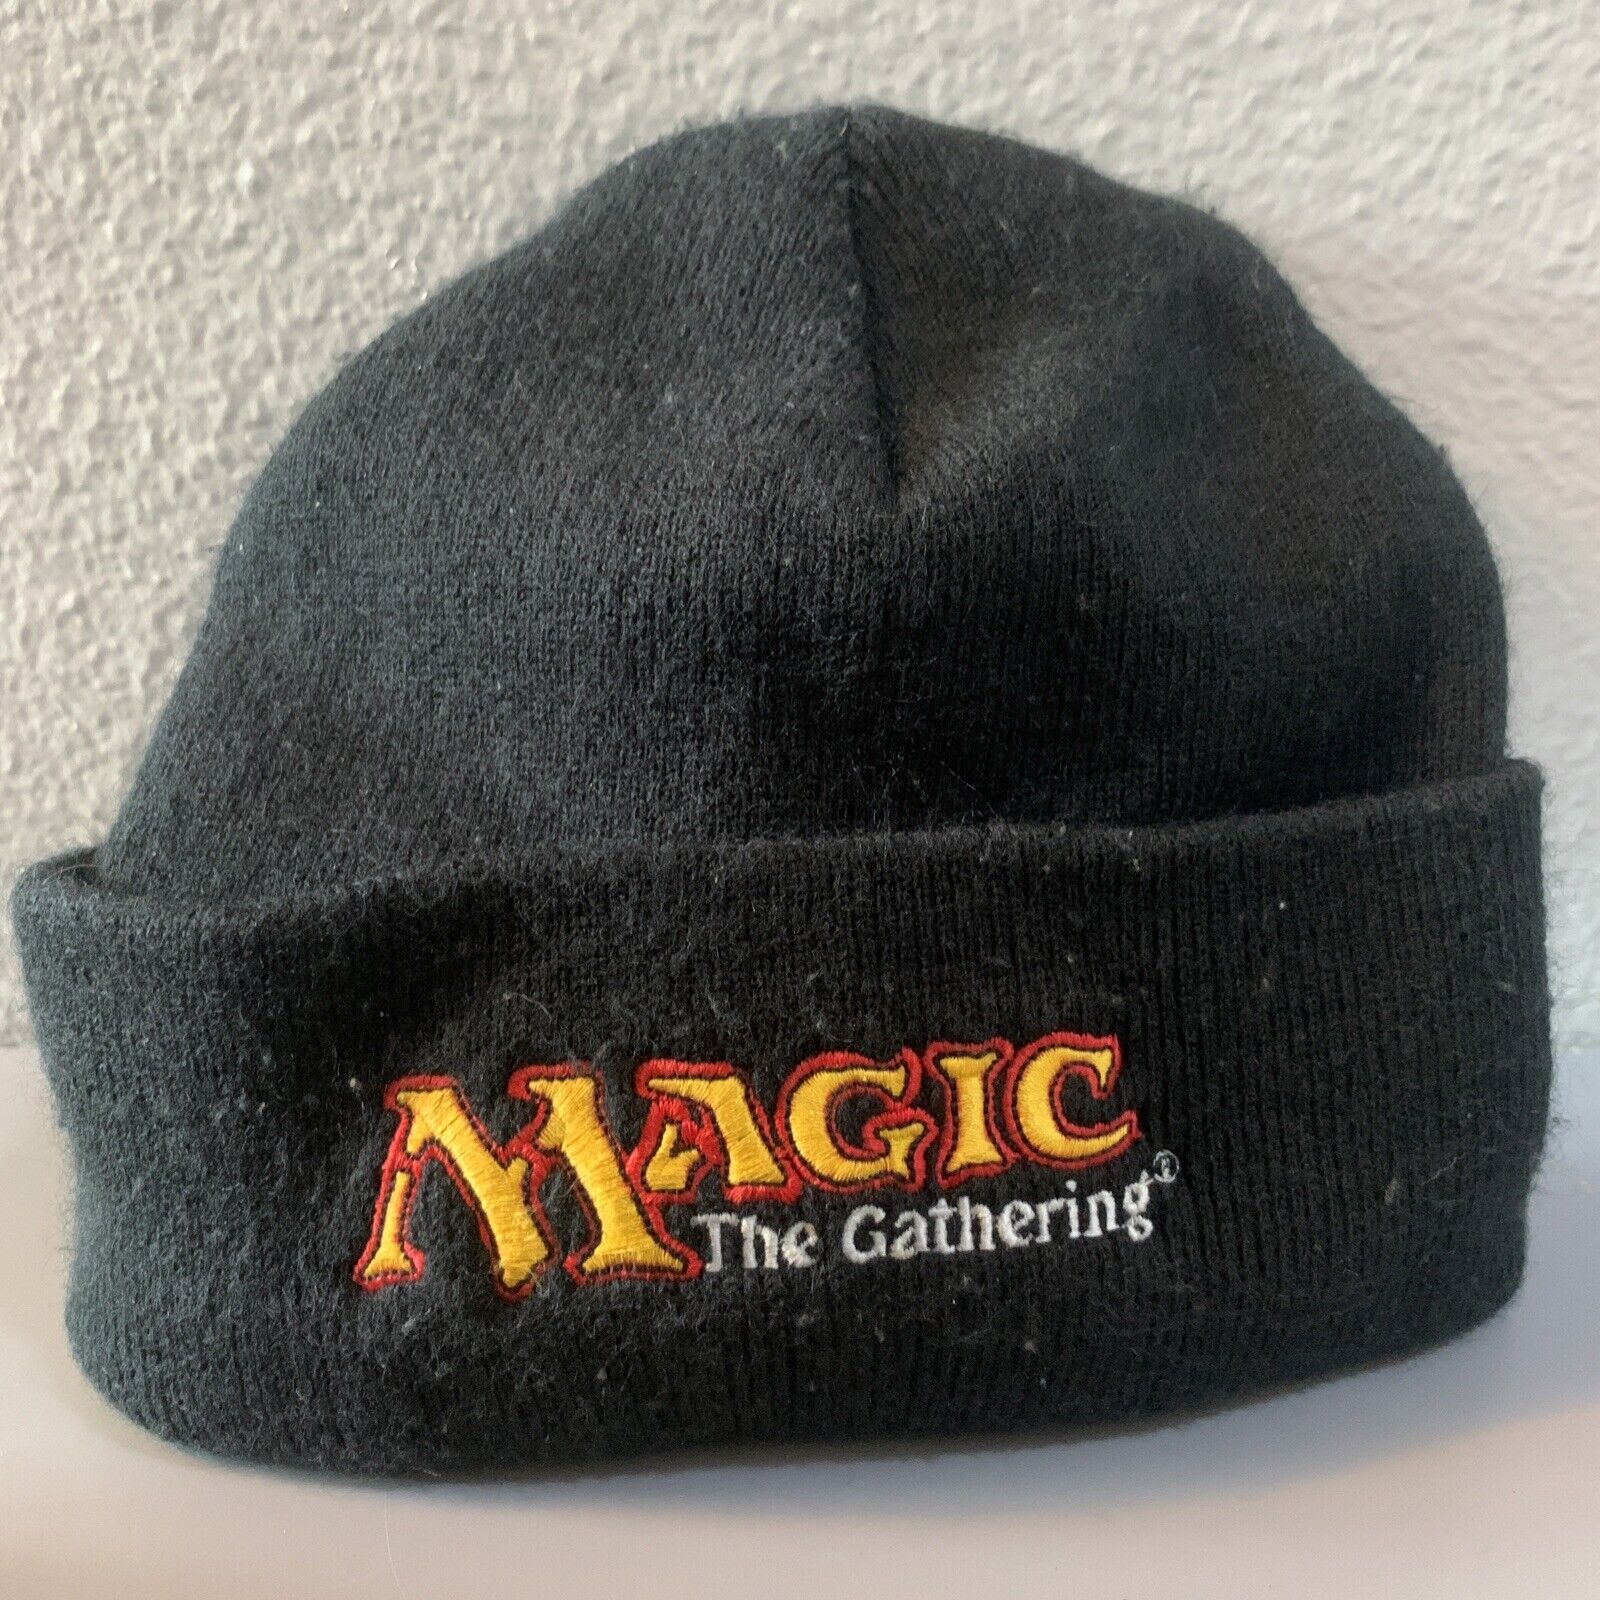 Magic The Gathering Beanie - Full Logo